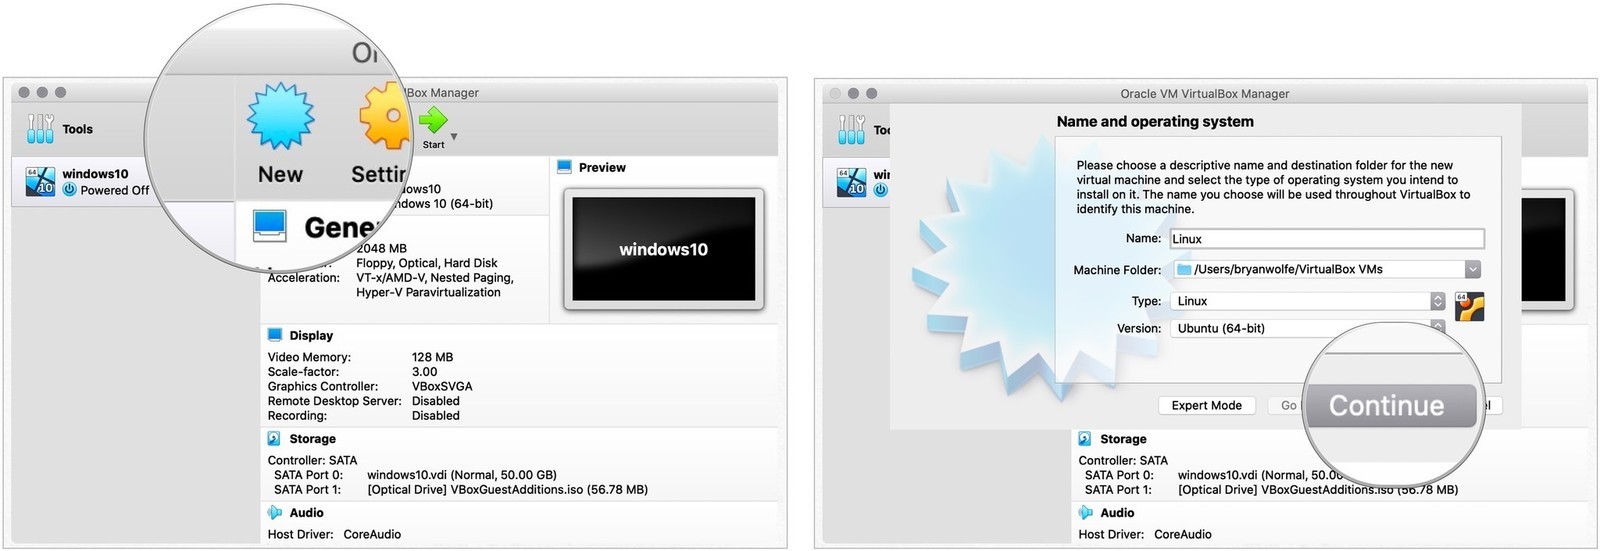 setup virtualbox on mac for linux